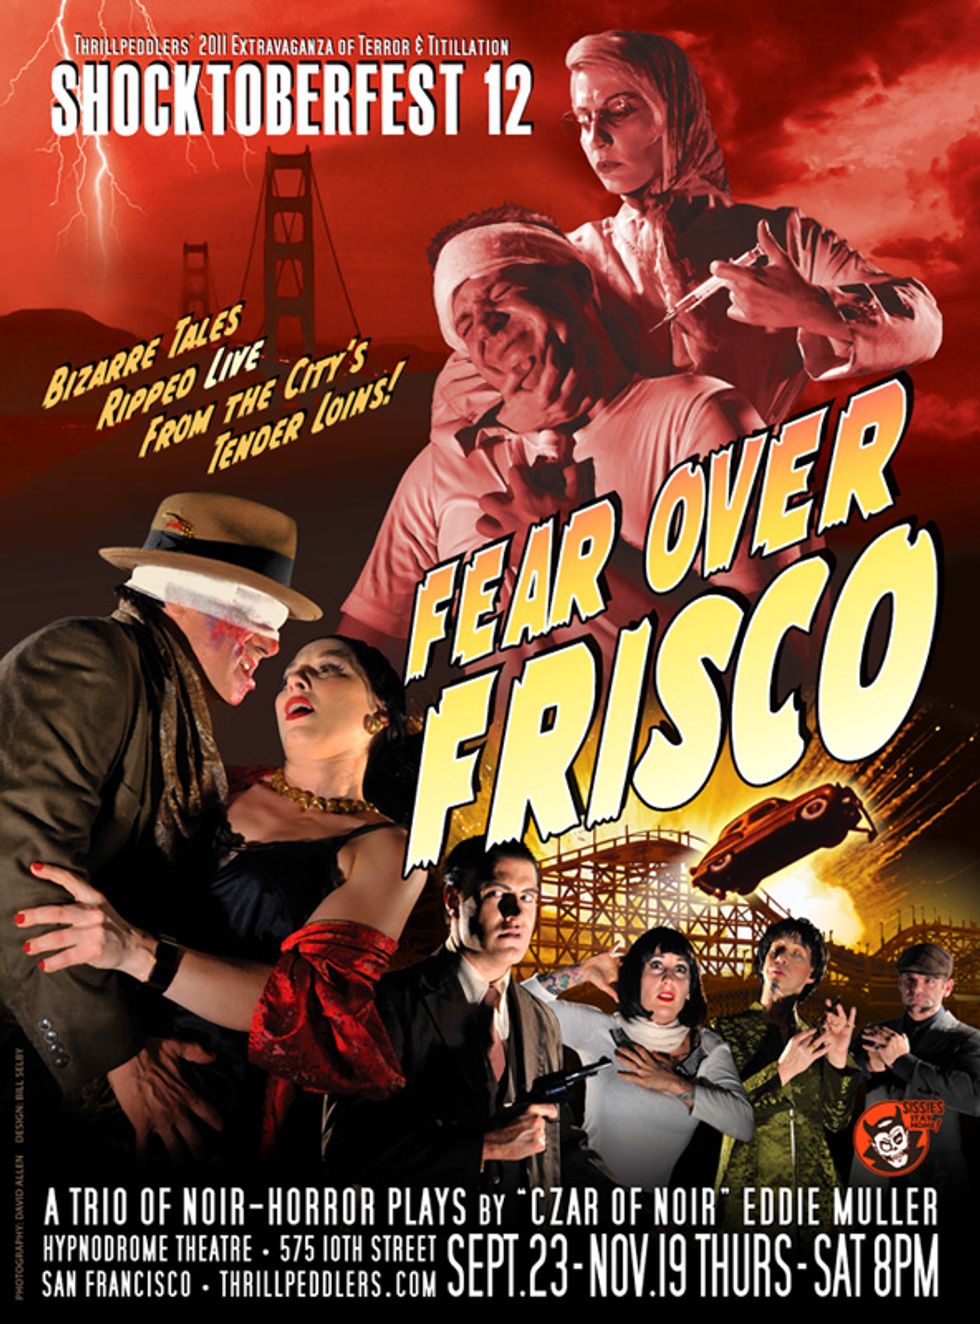 Shocktoberfest's "Fear Over Frisco" Gets You Shrieking at The Hypnodrome